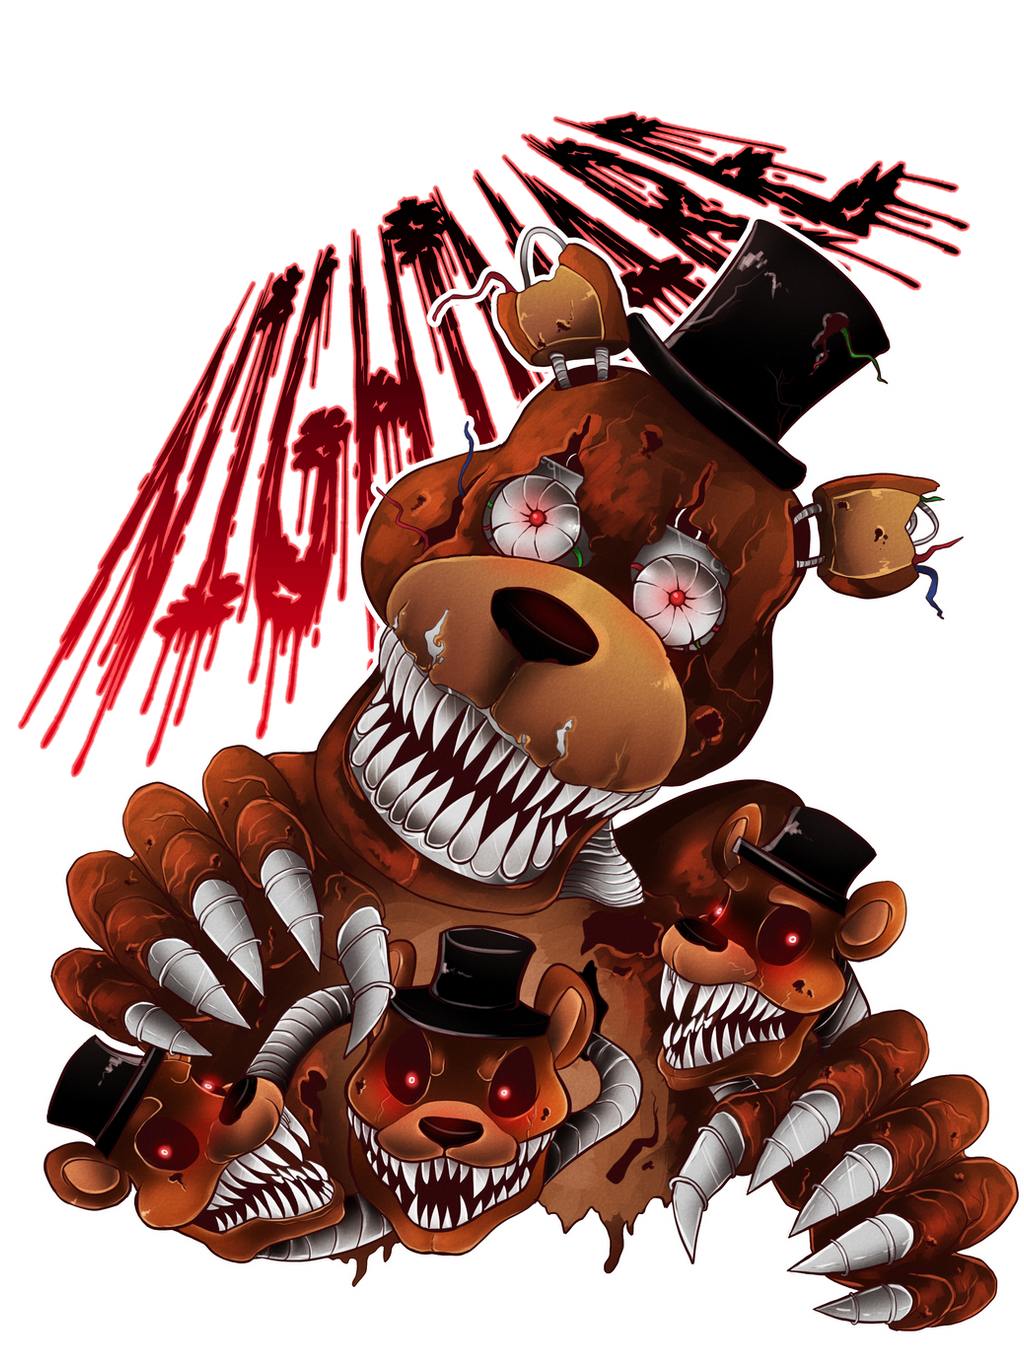 Fredbear (Five Nights at Freddy's 4) - Scary - Sticker